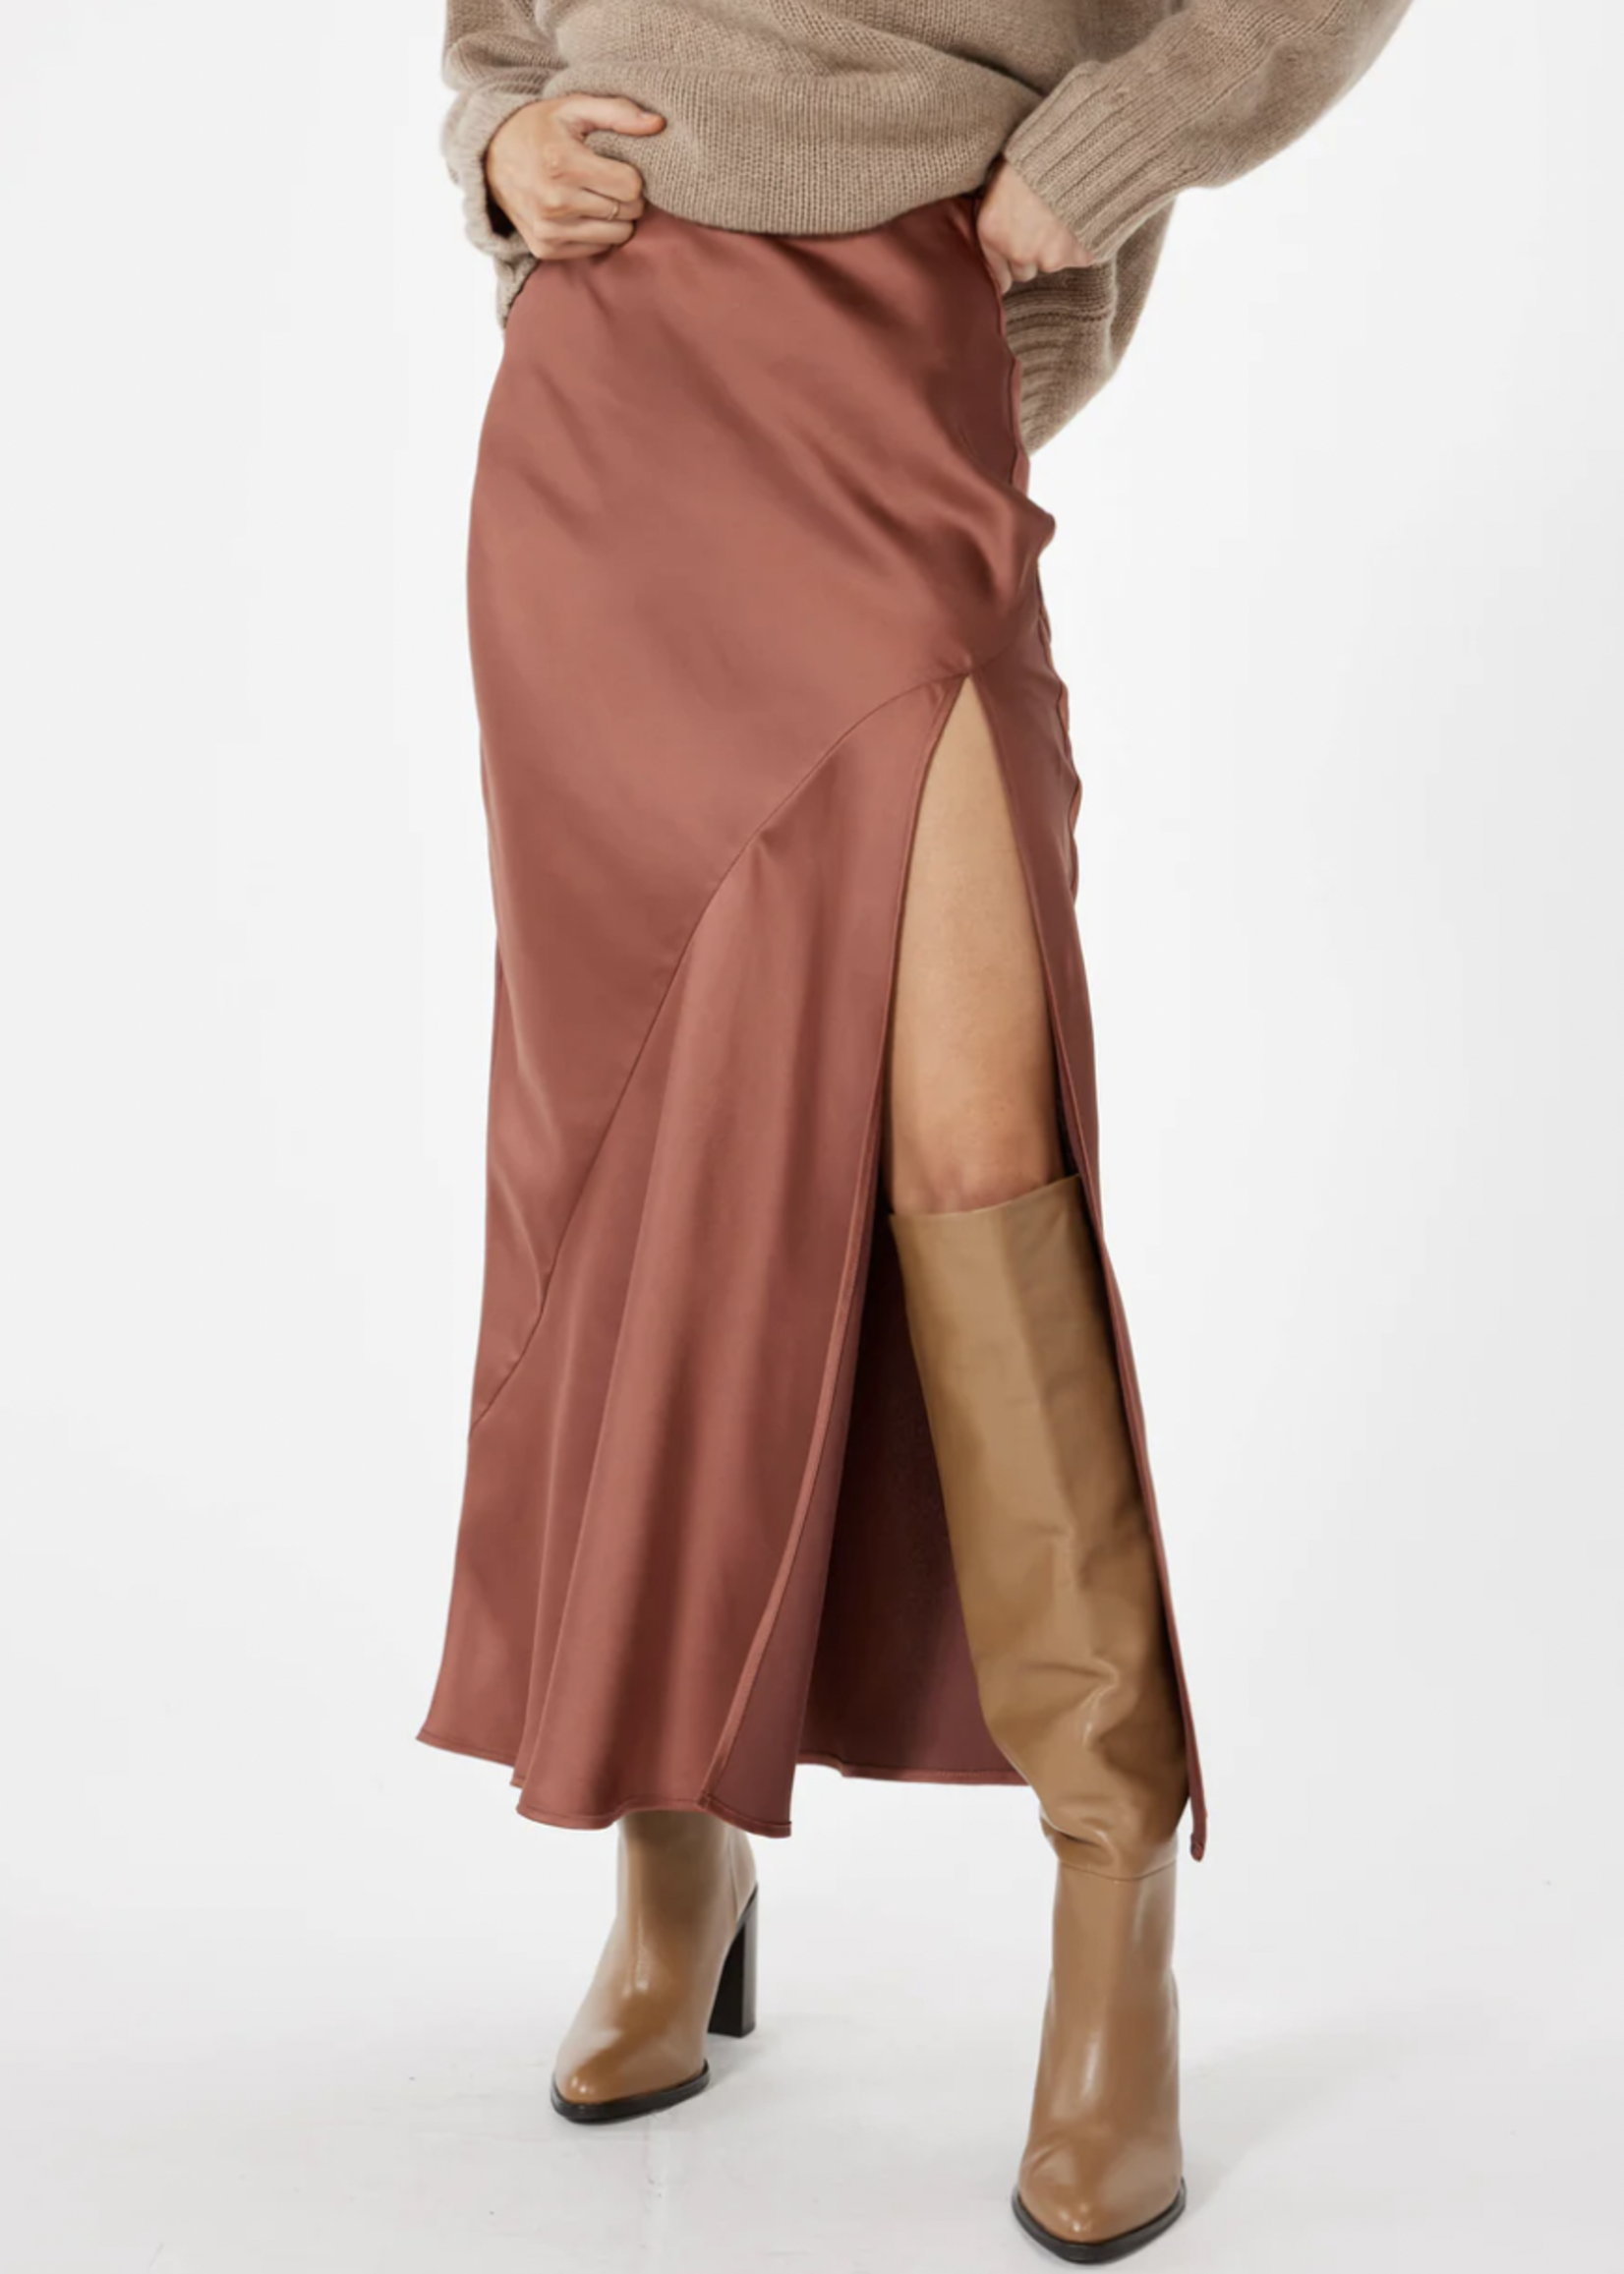 Elitaire Boutique Manhattan Skirt in Copper